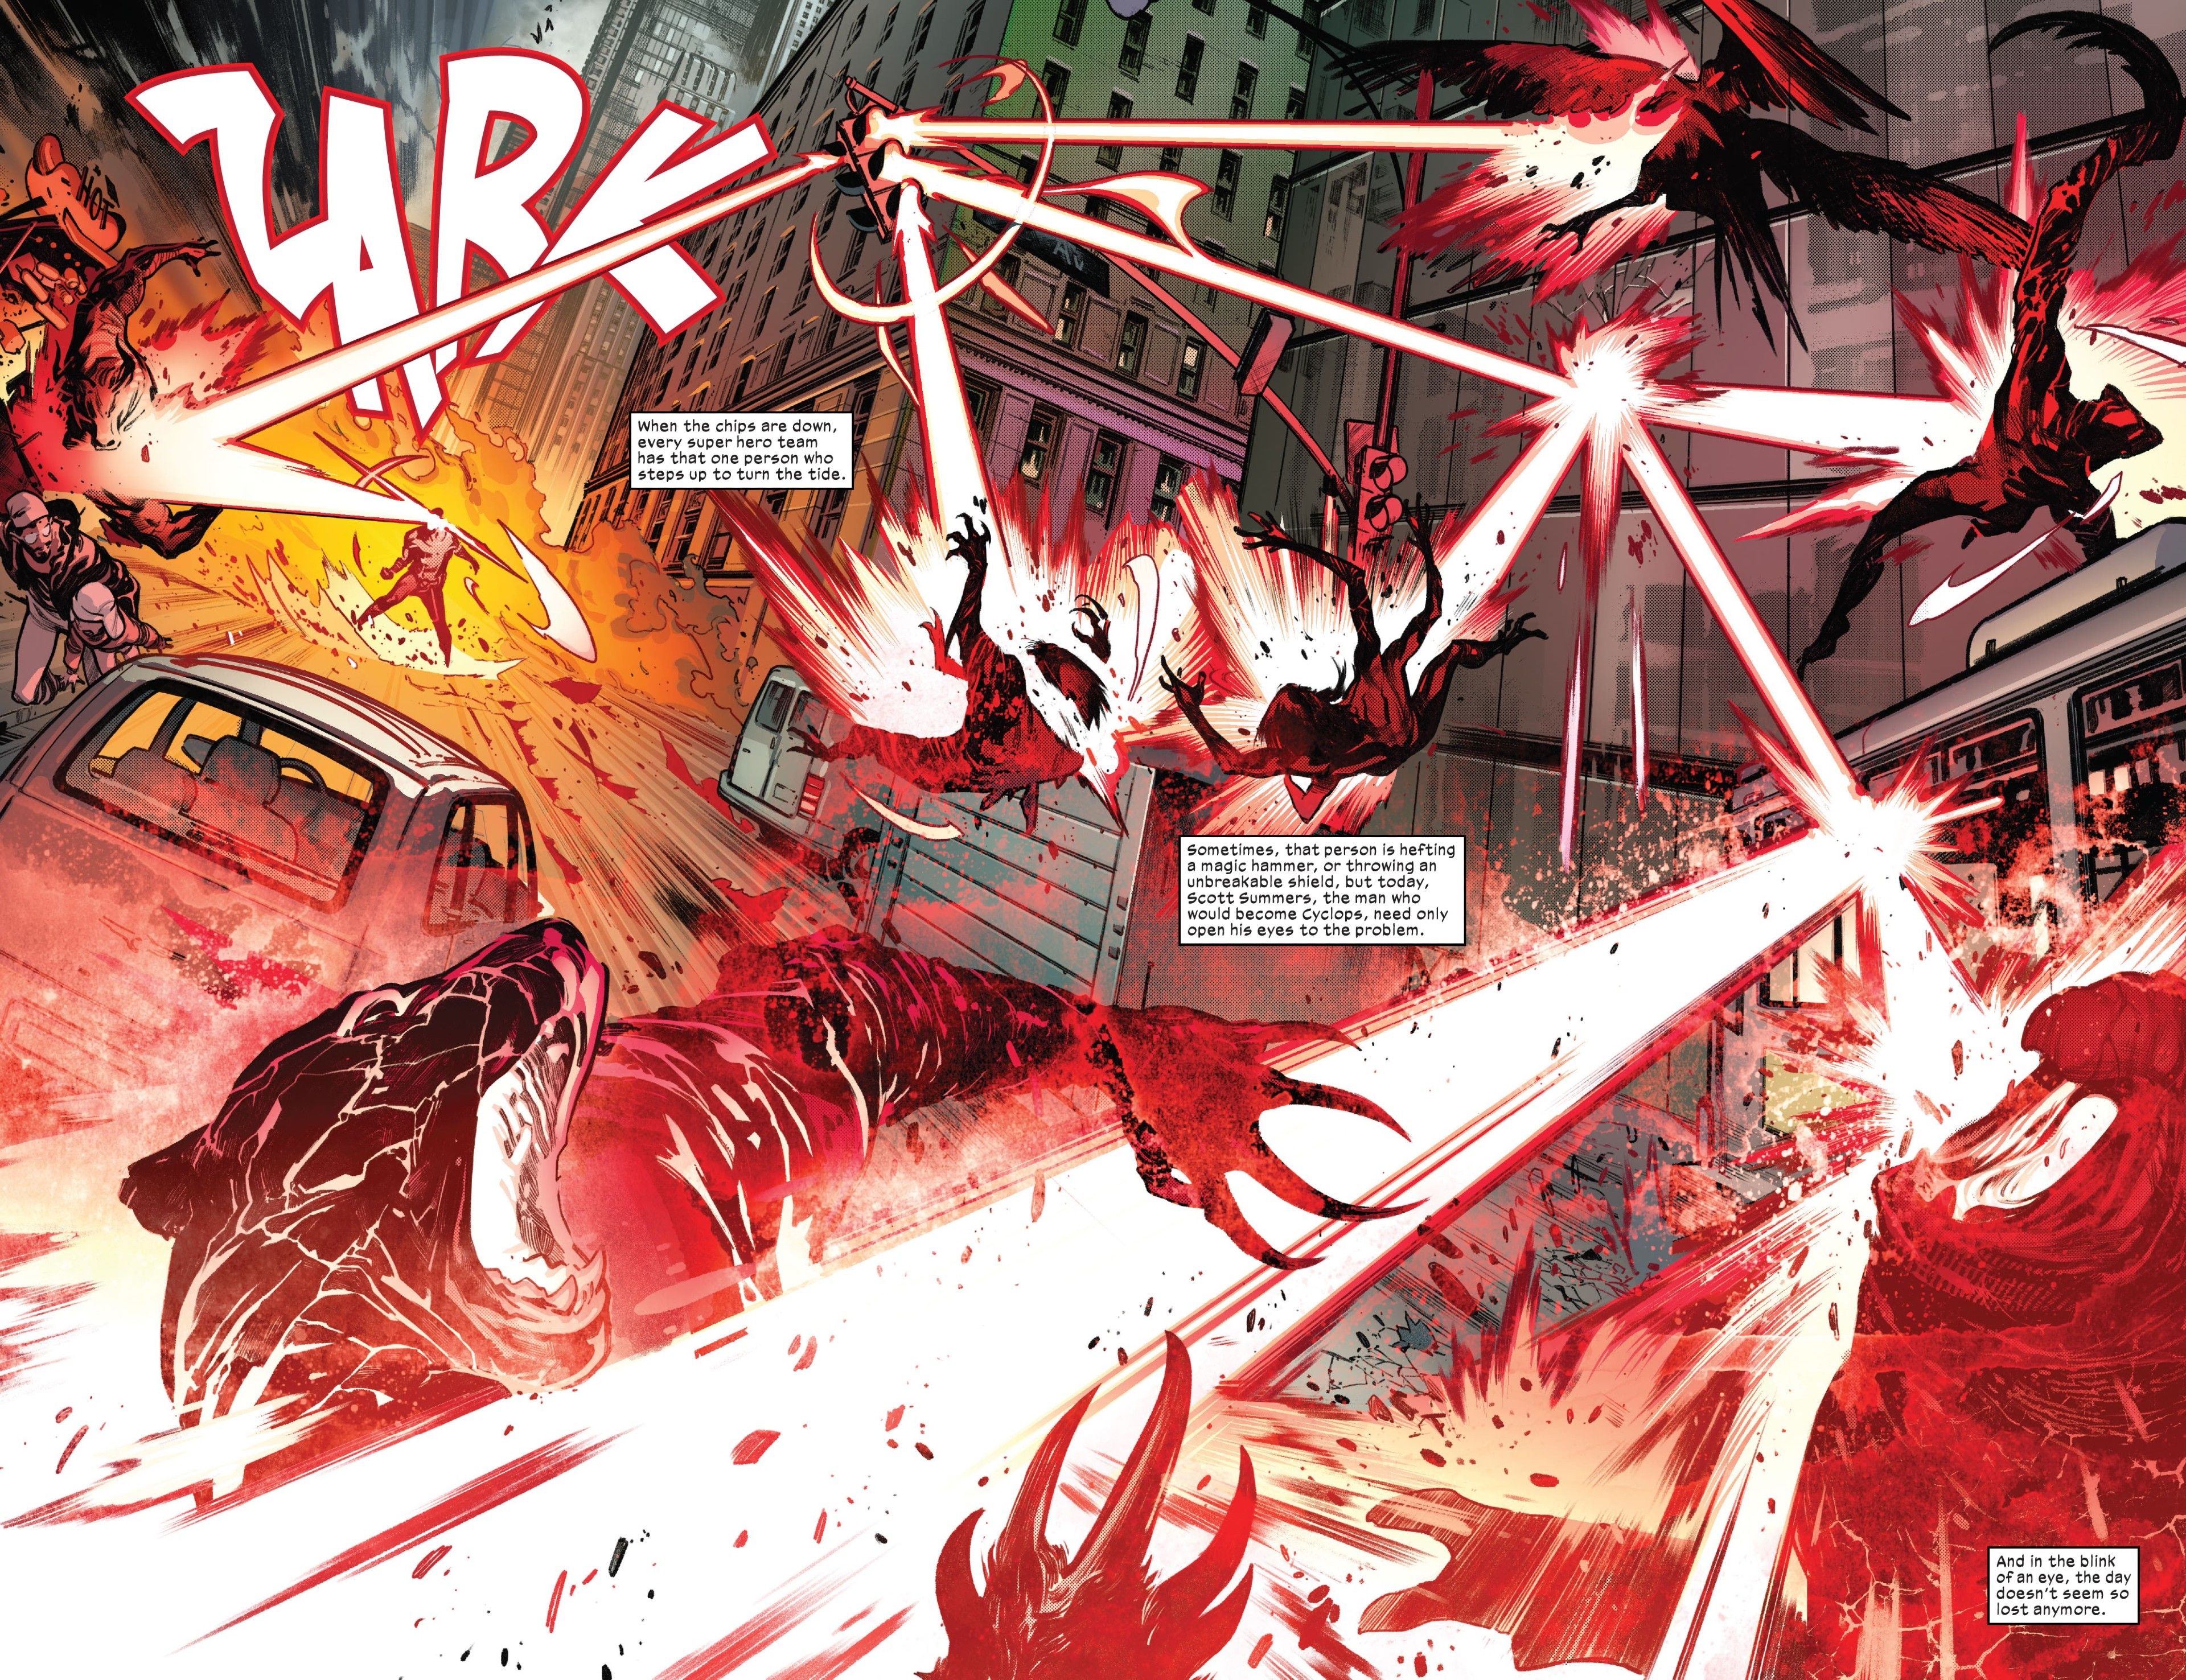 amazing art of cyclops' powers from Pepe Larraz's in x-men 7